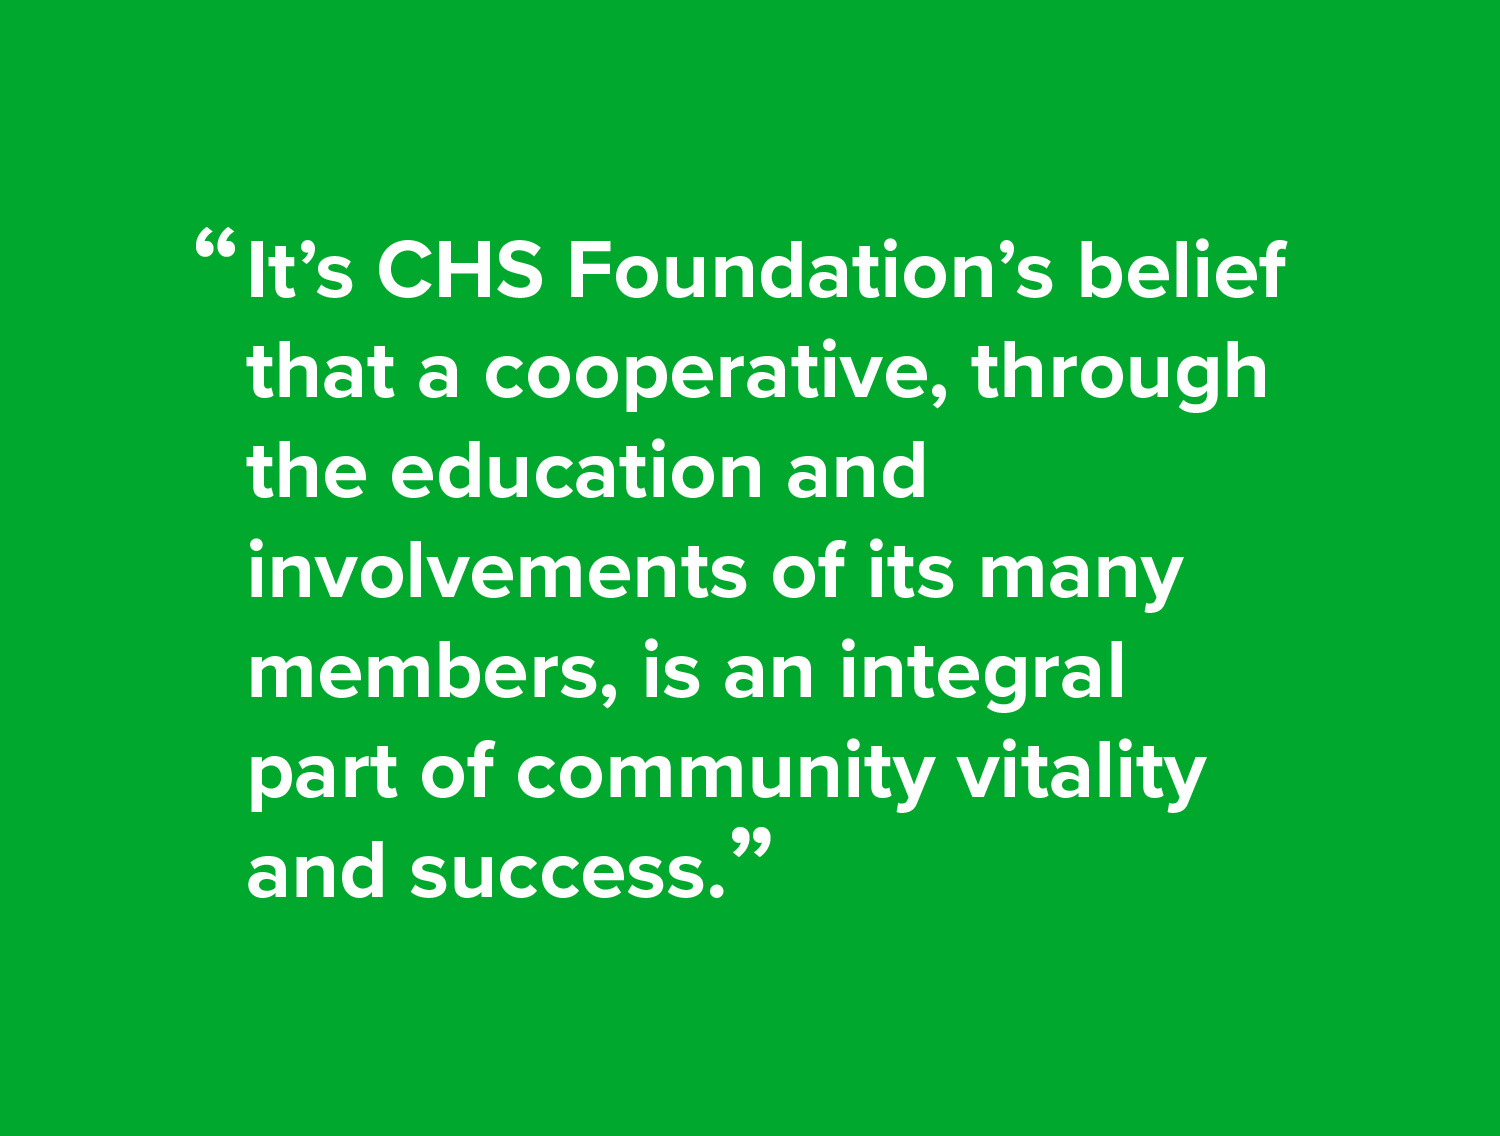 It’s CHS Foundation’s belief that a cooperative, through the education and involvements of its many members, is an integral part of community vitality and success.